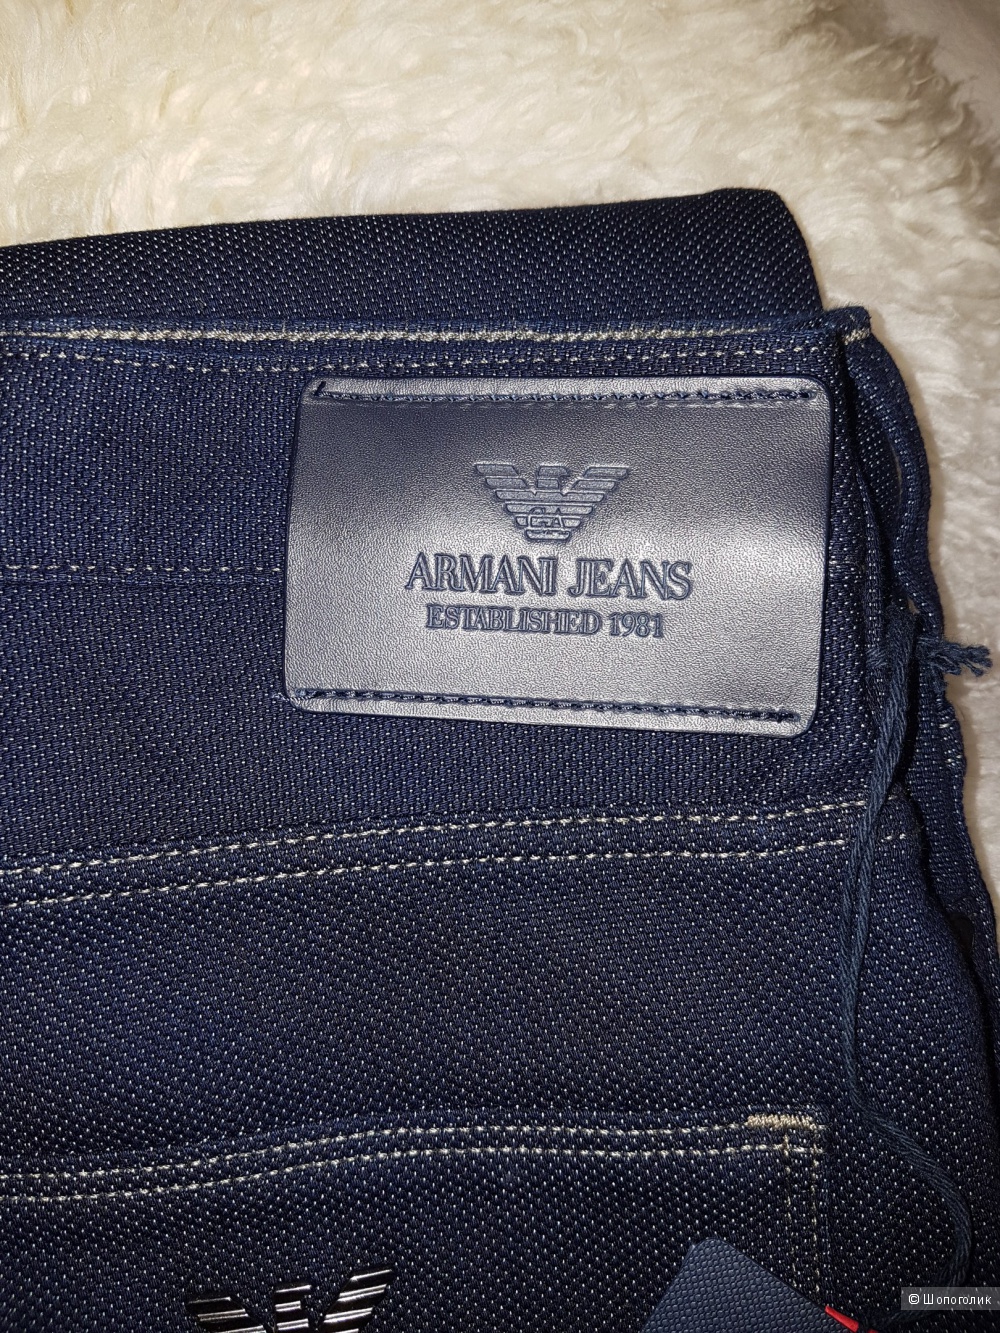 Джинсы Armani Jeans. Размер 30 (маломерят)